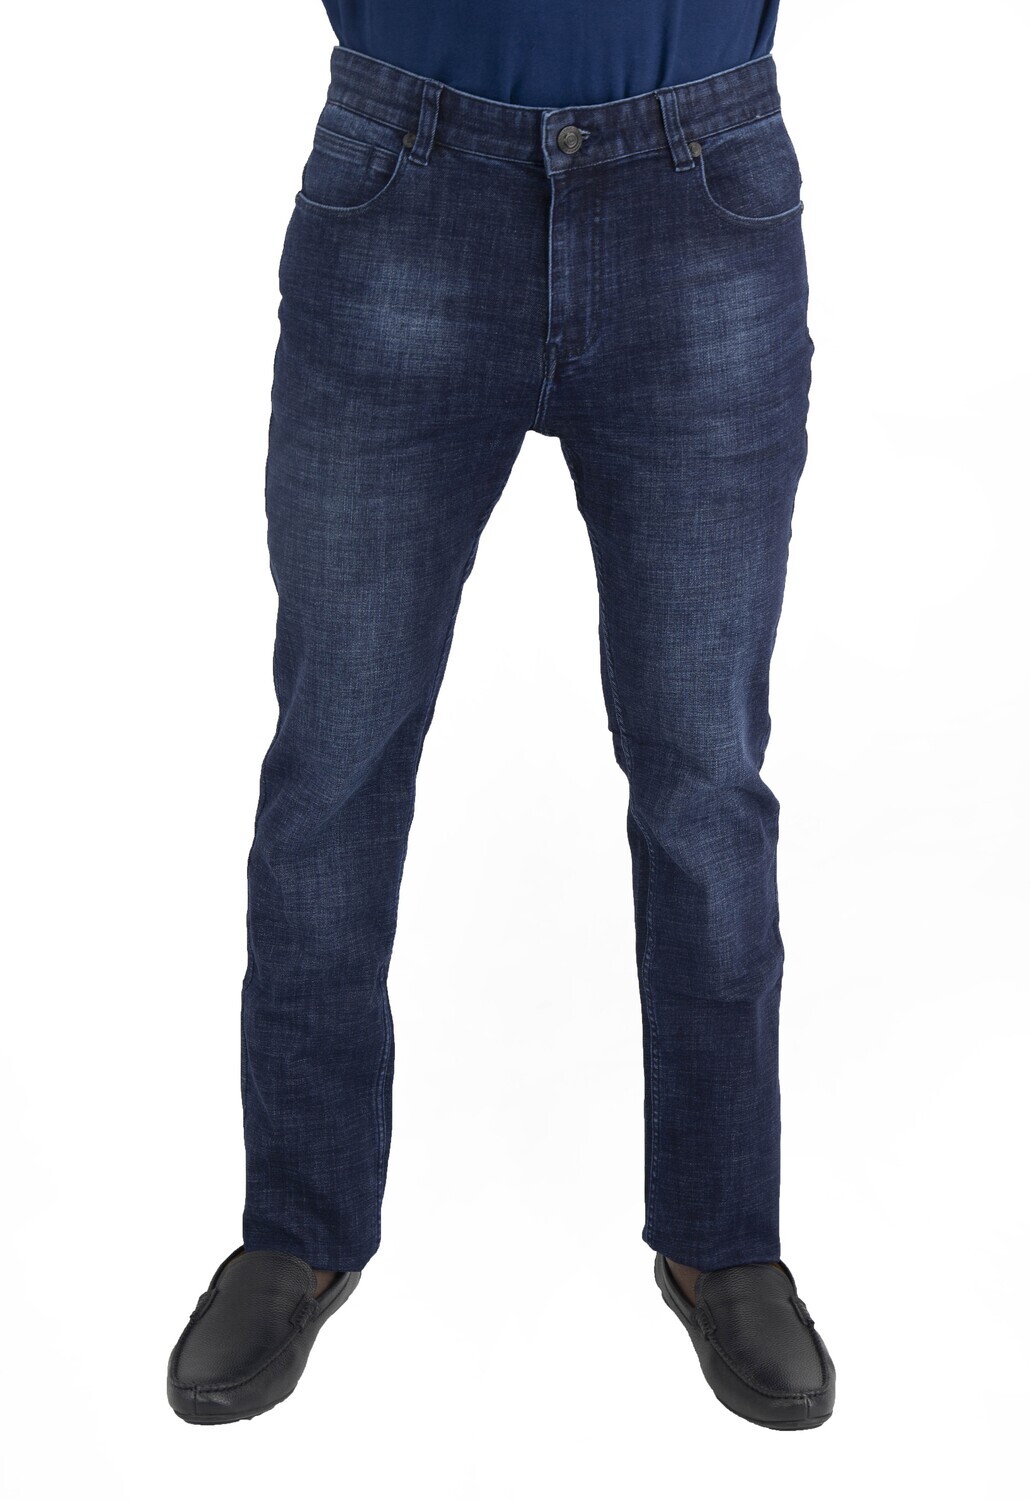 Cavana Slim fit jeans for men